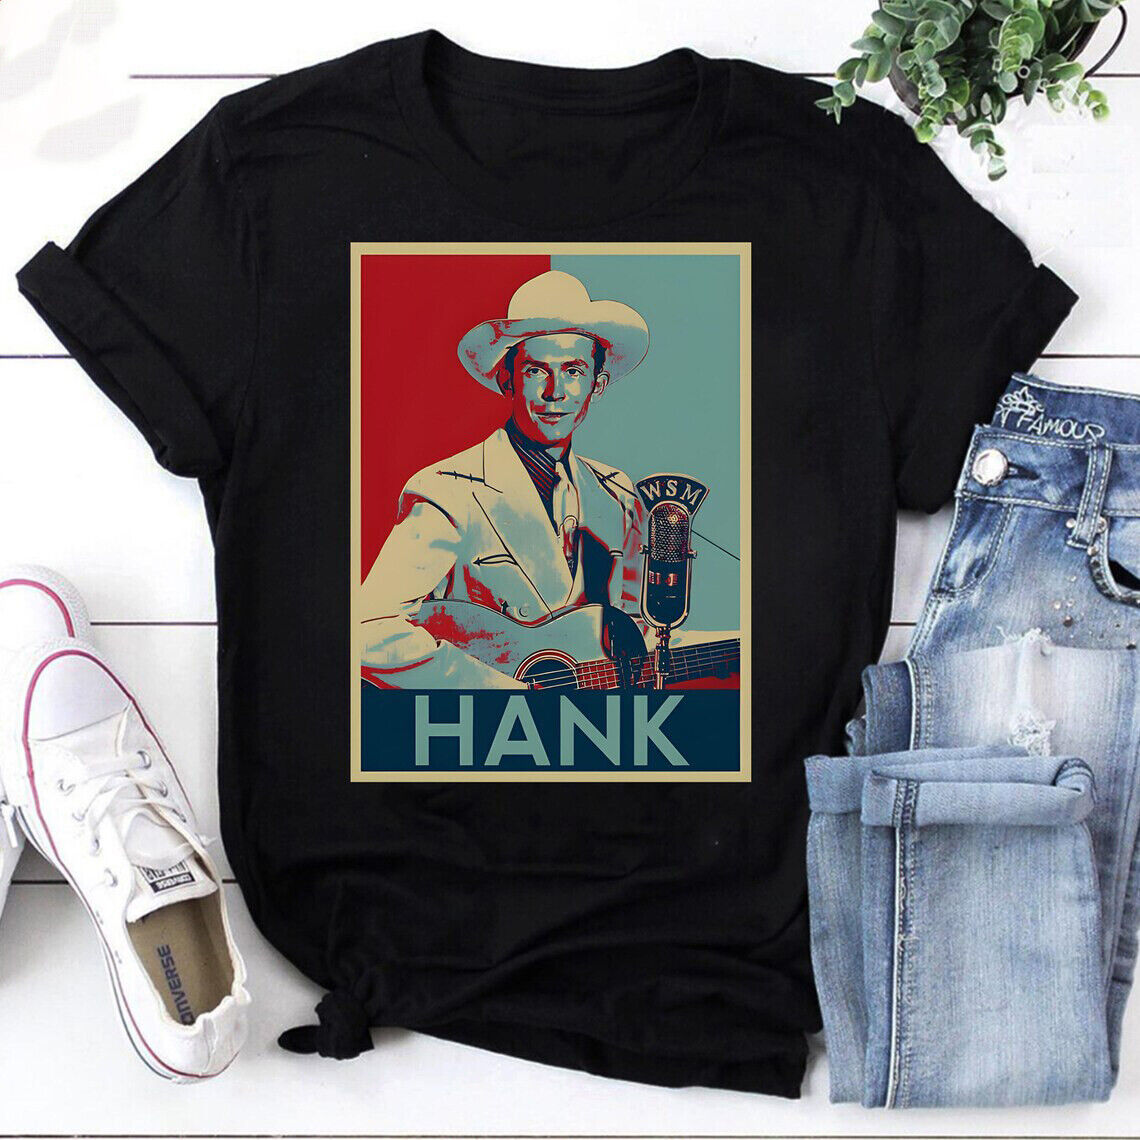 Vintage Hank Williams Black Short Sleeve T-Shirt PF91130